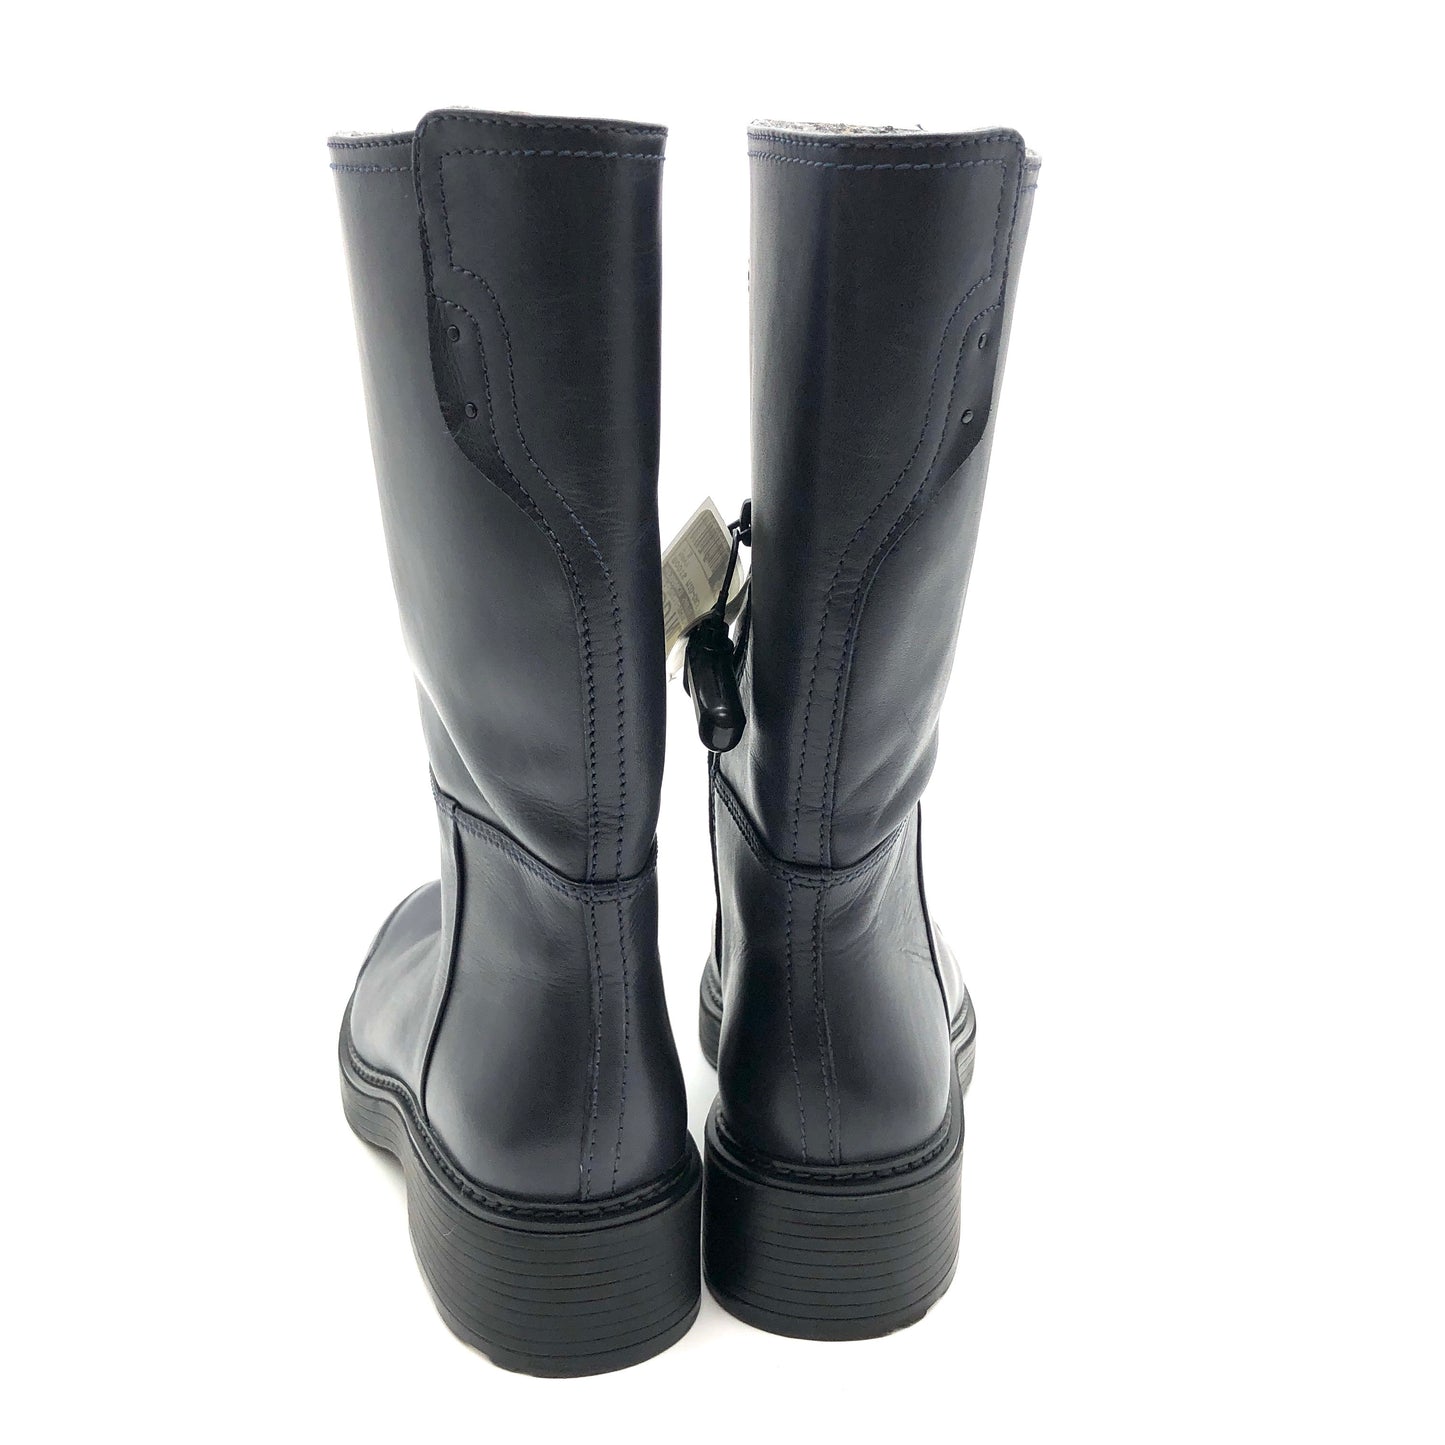 Boots Mid-calf Flats By Franco Sarto  Size: 7.5